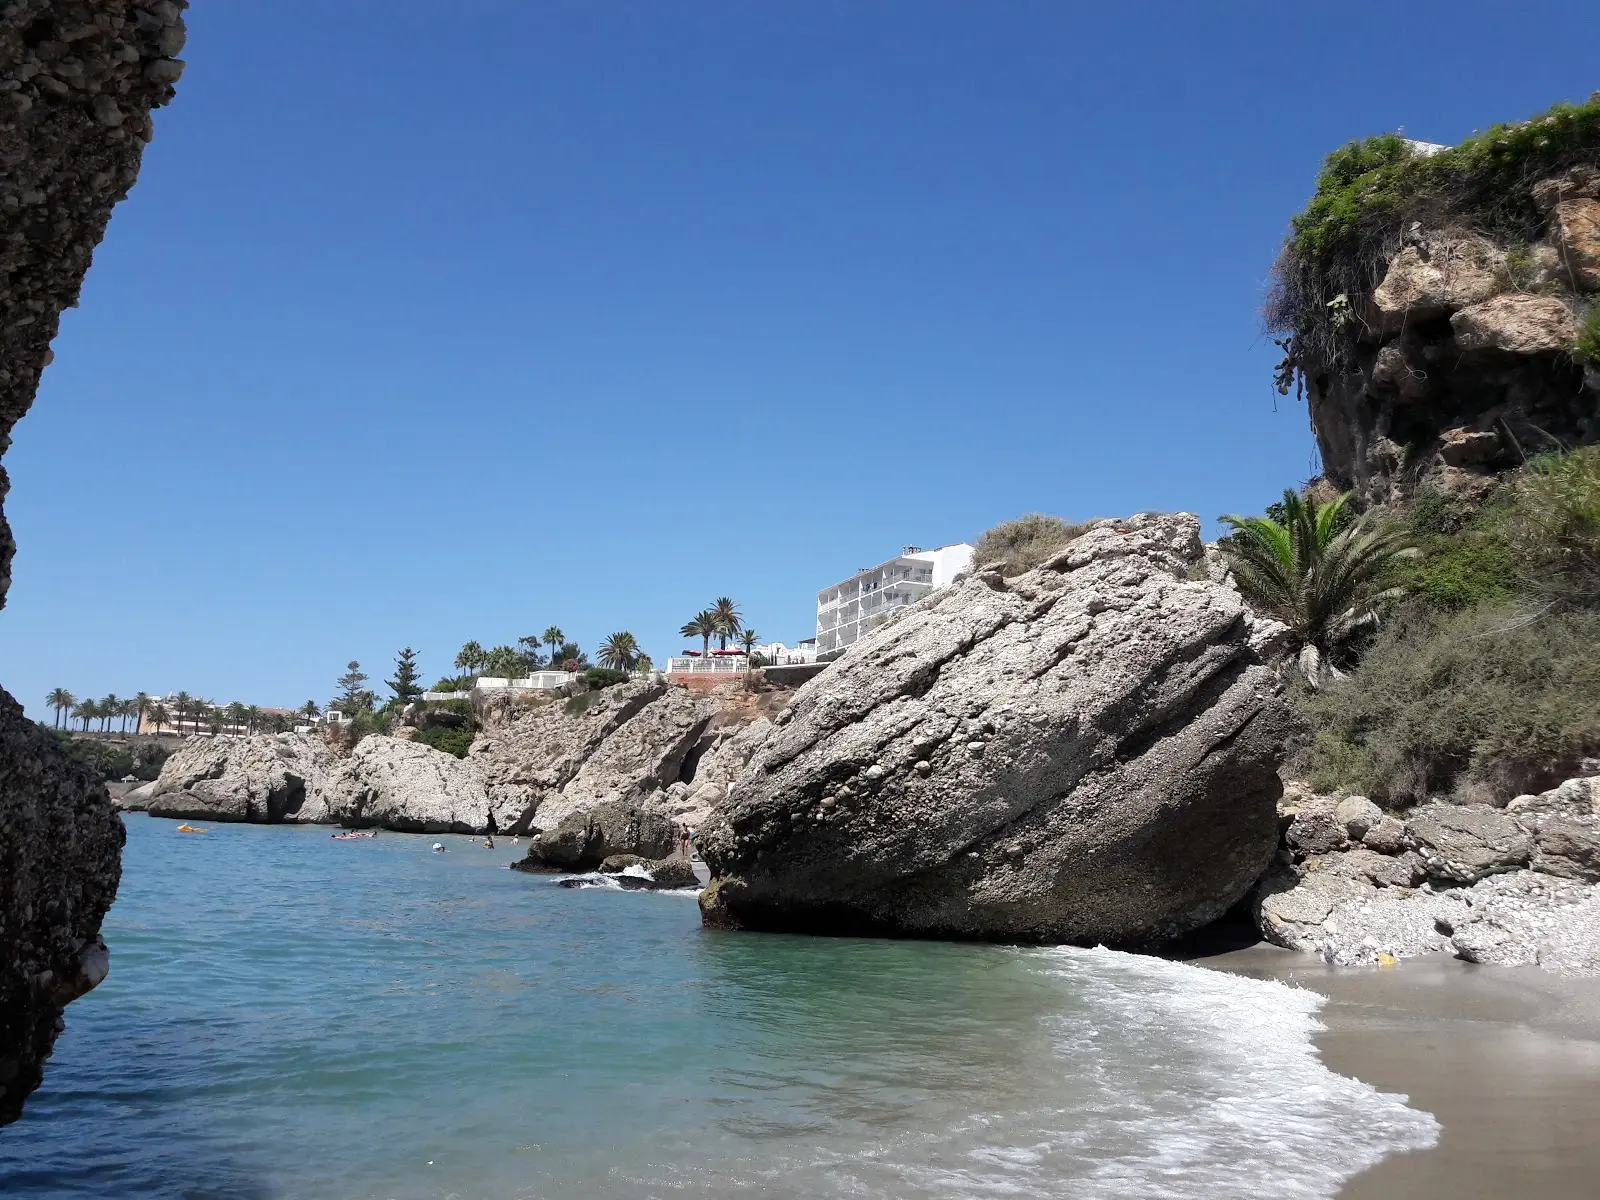 Naturverbundene Atmosphäre am Playa el Chorrillo 